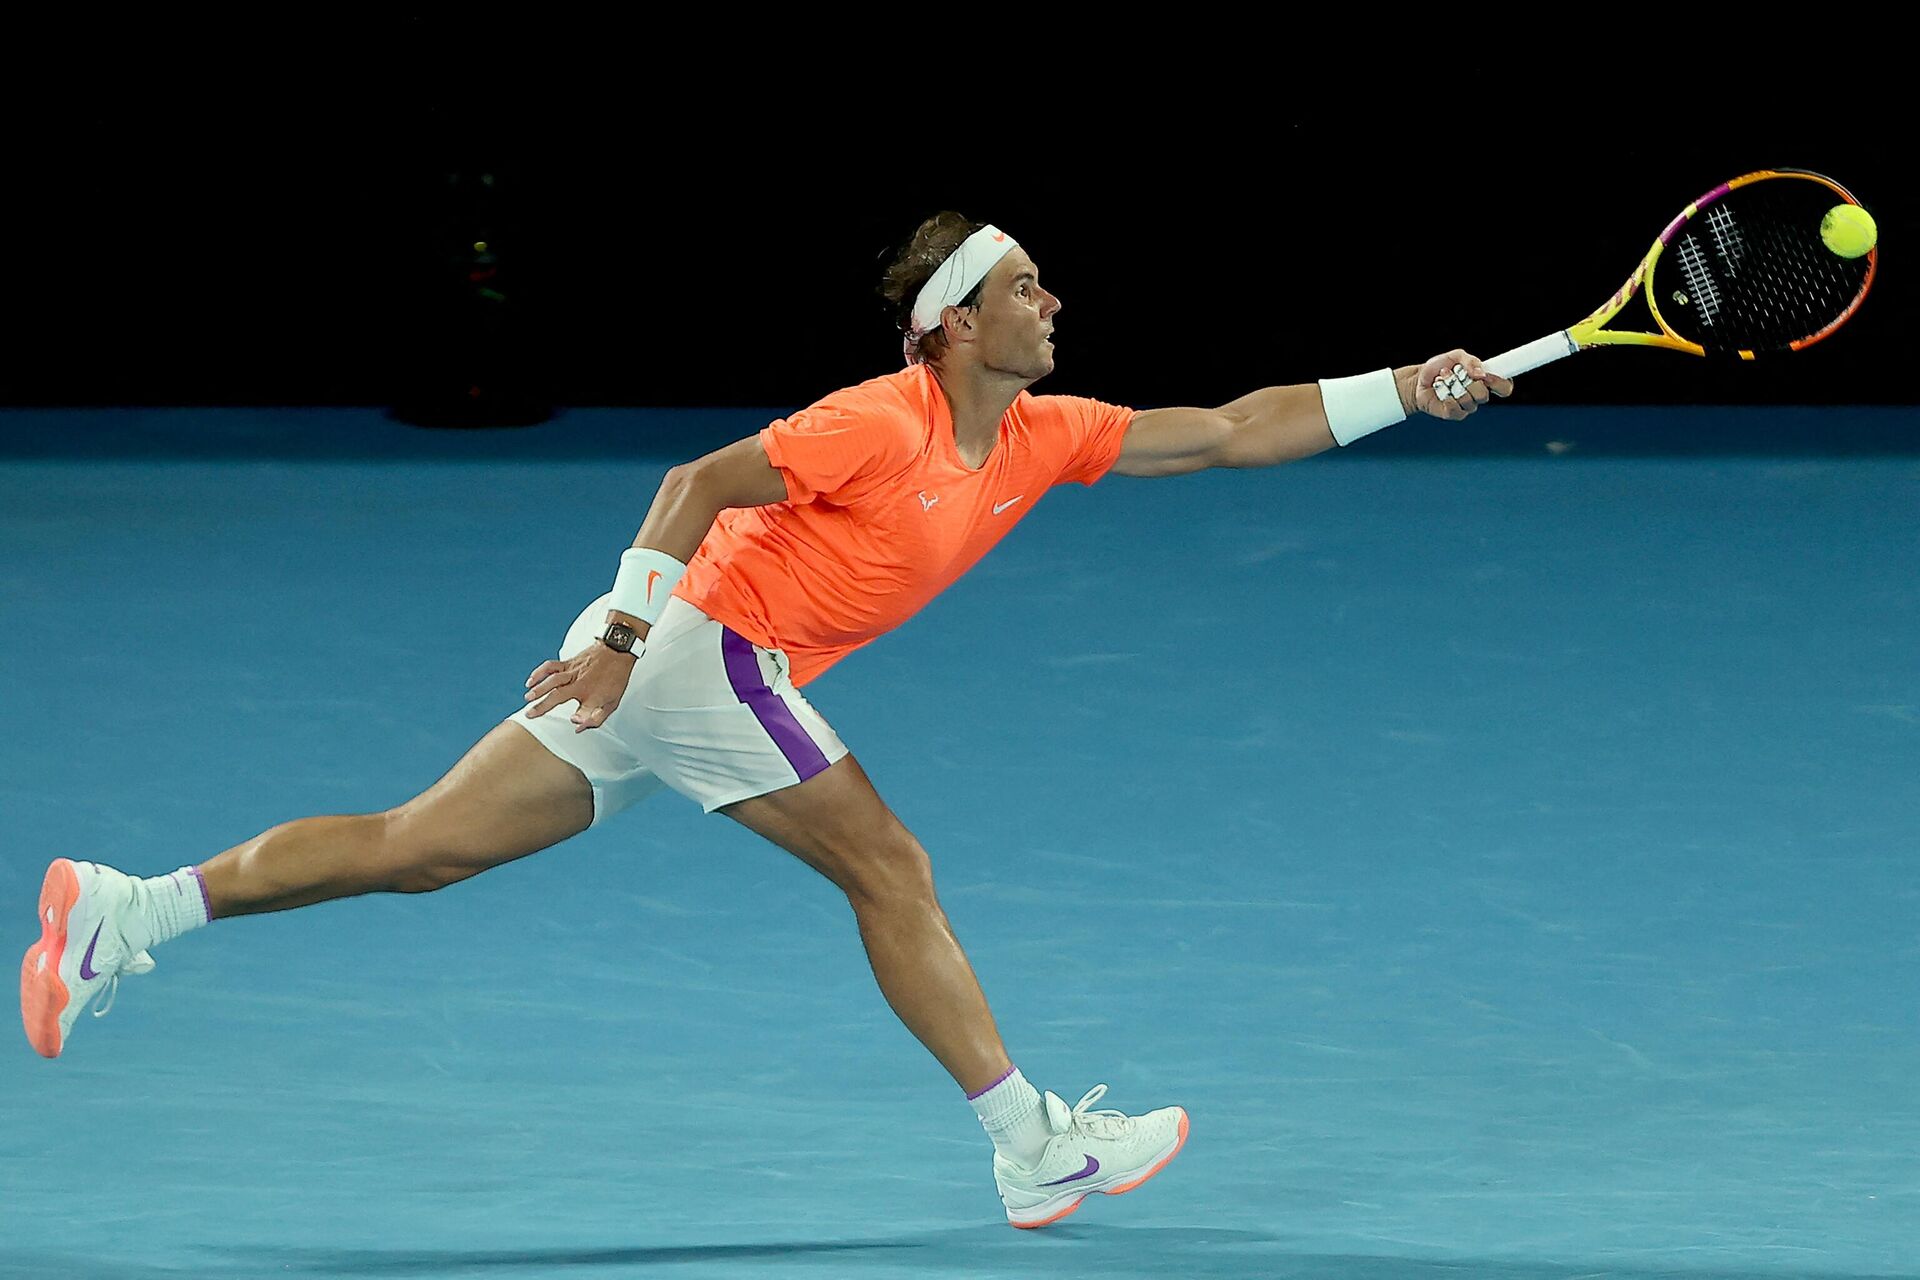 Rafa Nadal durante el partido de cuartos del Open de Australia 2021 ante Tsitsipas - Sputnik Mundo, 1920, 17.02.2021